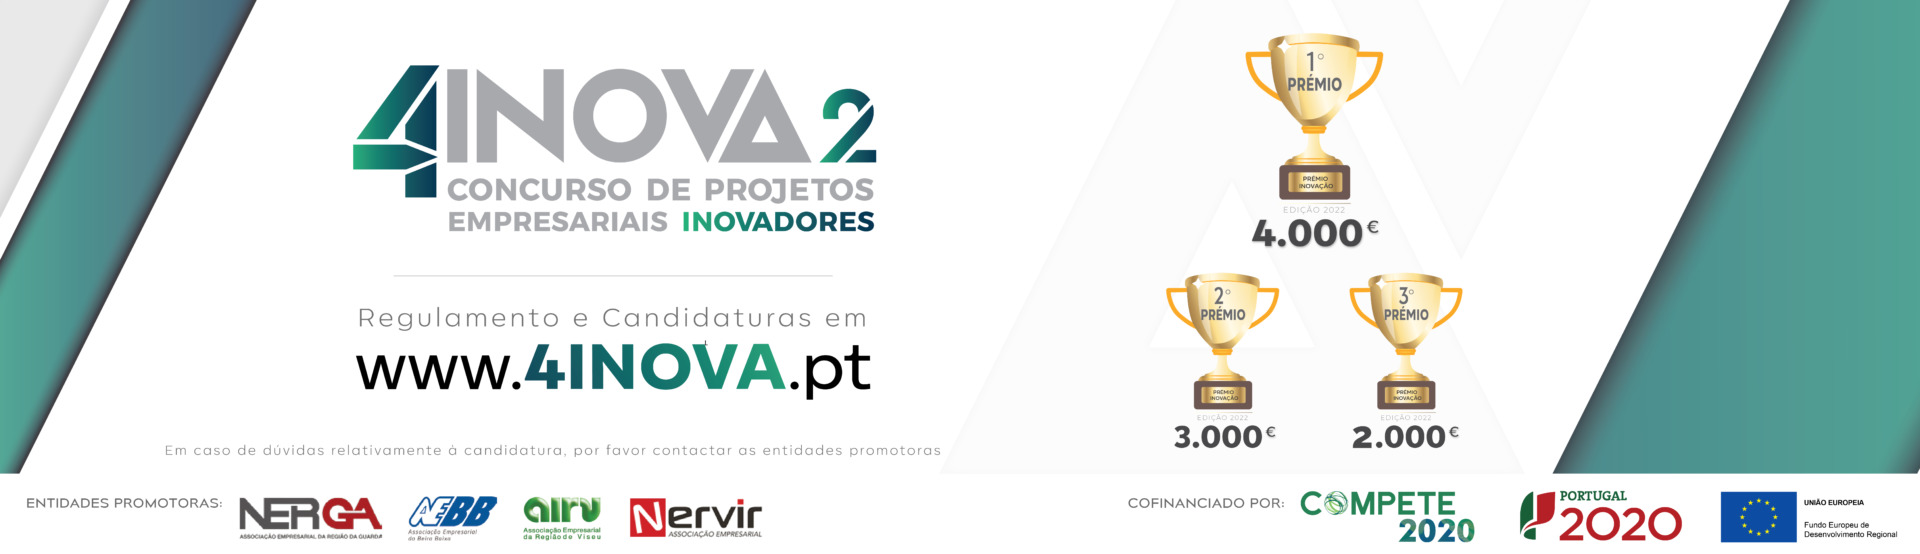 Concurso 4INOVA2 – Concurso de Projetos Empresariais Inovadores 